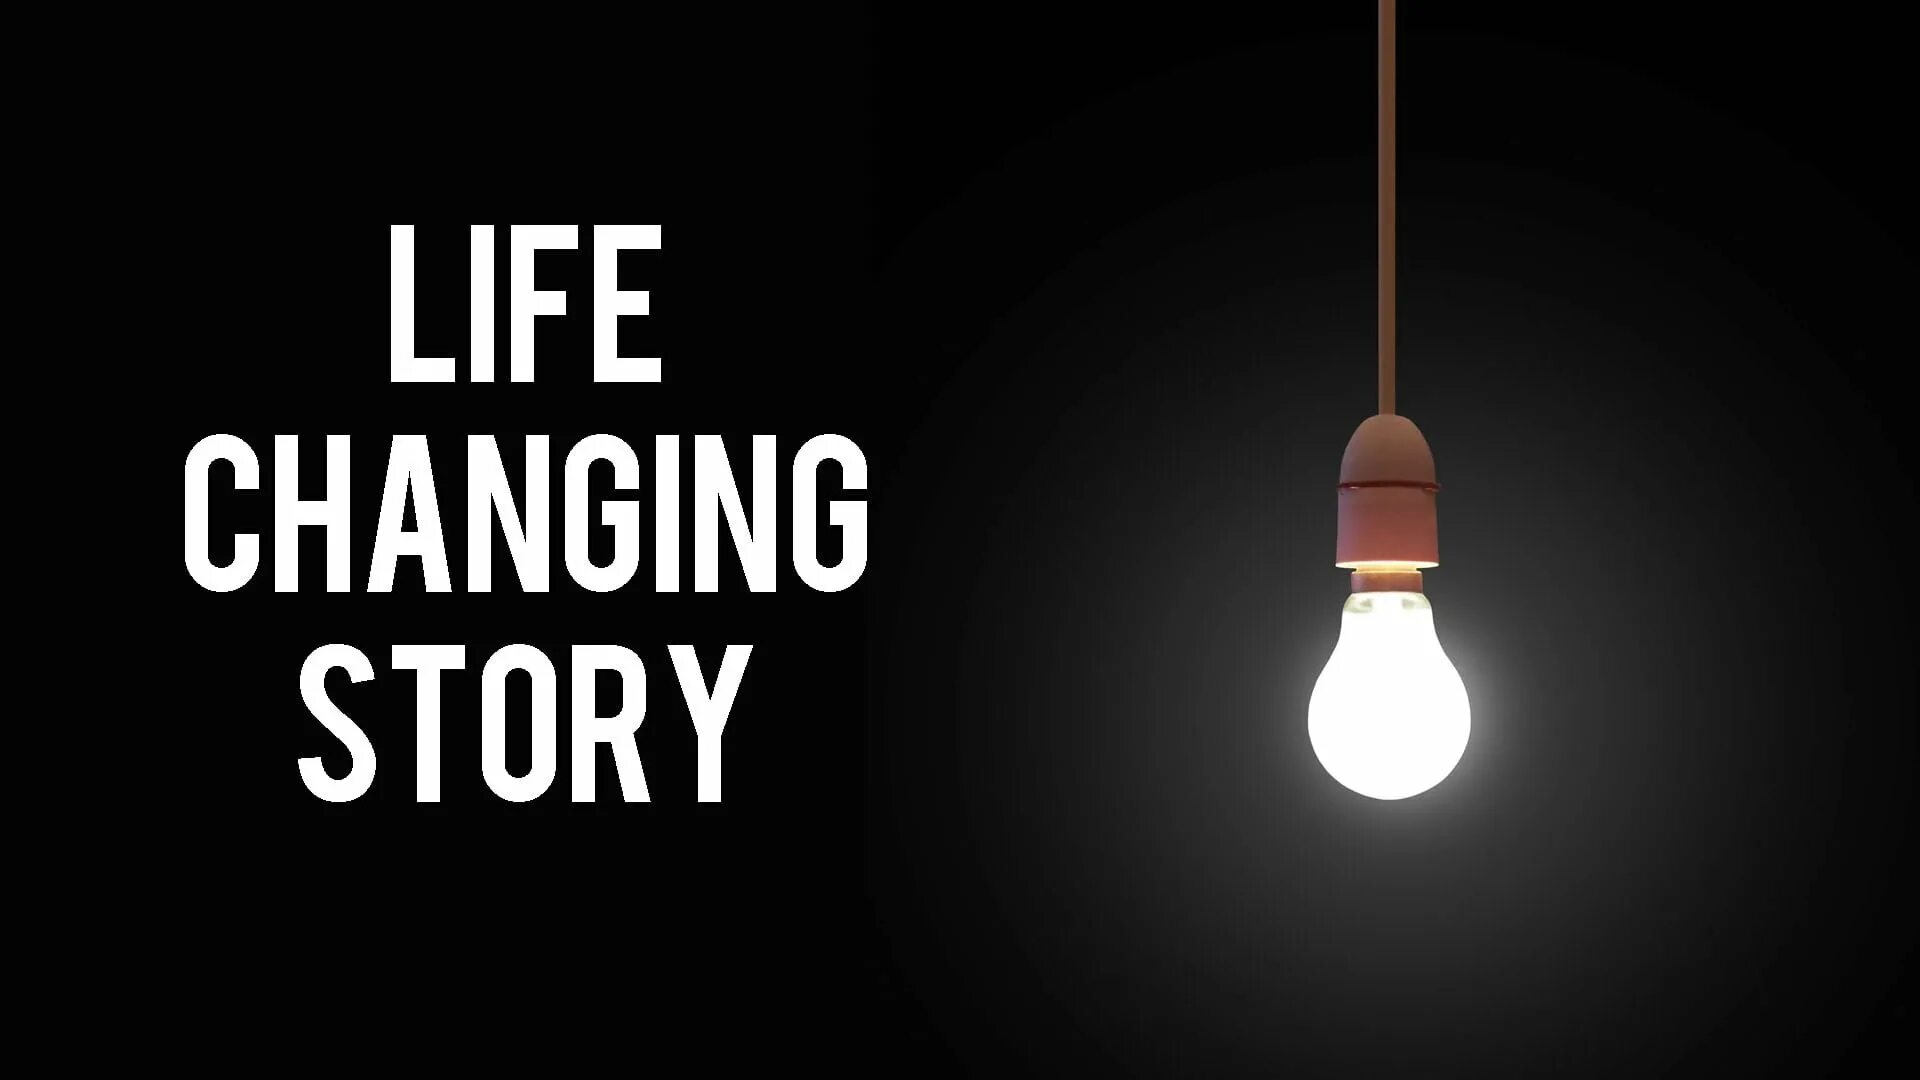 Life changing. Life changes. Life changes фон. Life story.